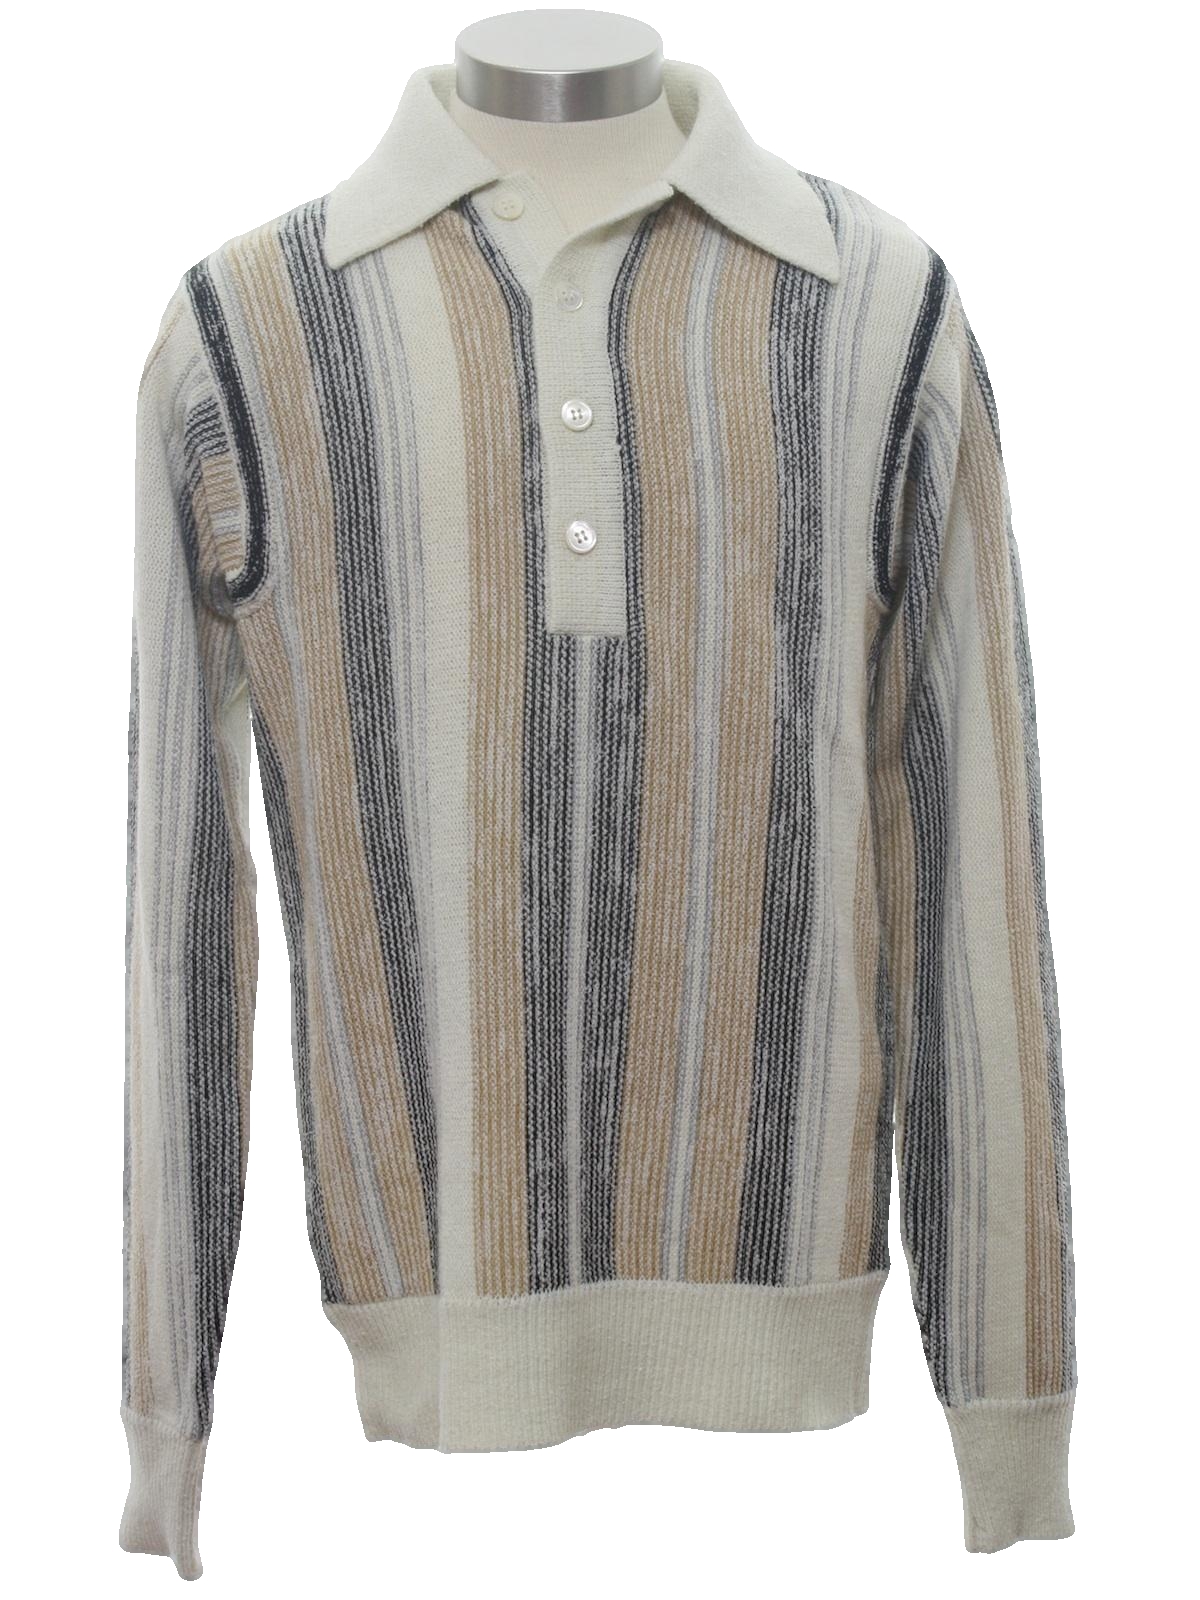 Vintage 70s Knit Shirt: 70s -Missing Label- Mens cream background heavy ...